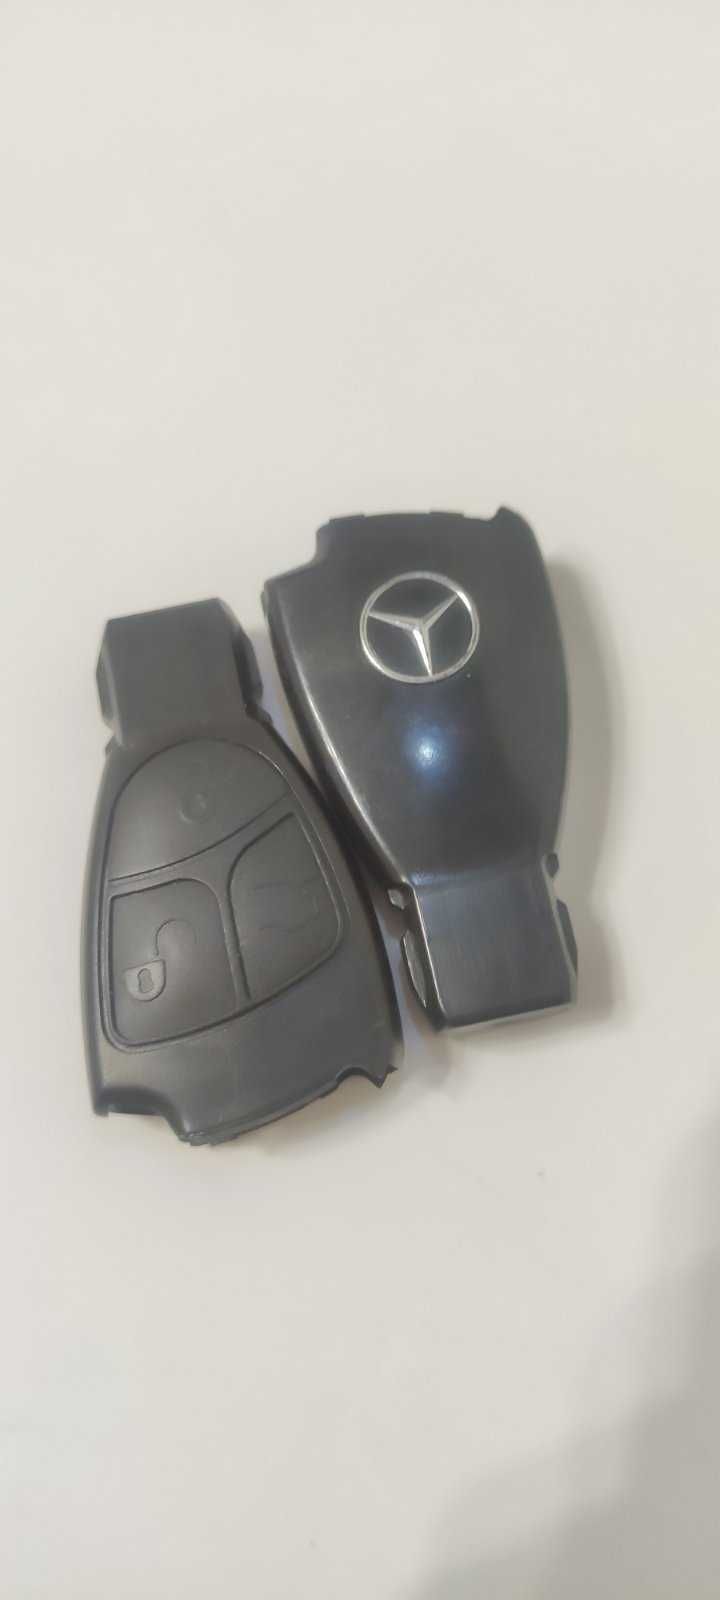 Корпус ключа "Рибка" Mercedes Benz 3 кнопки